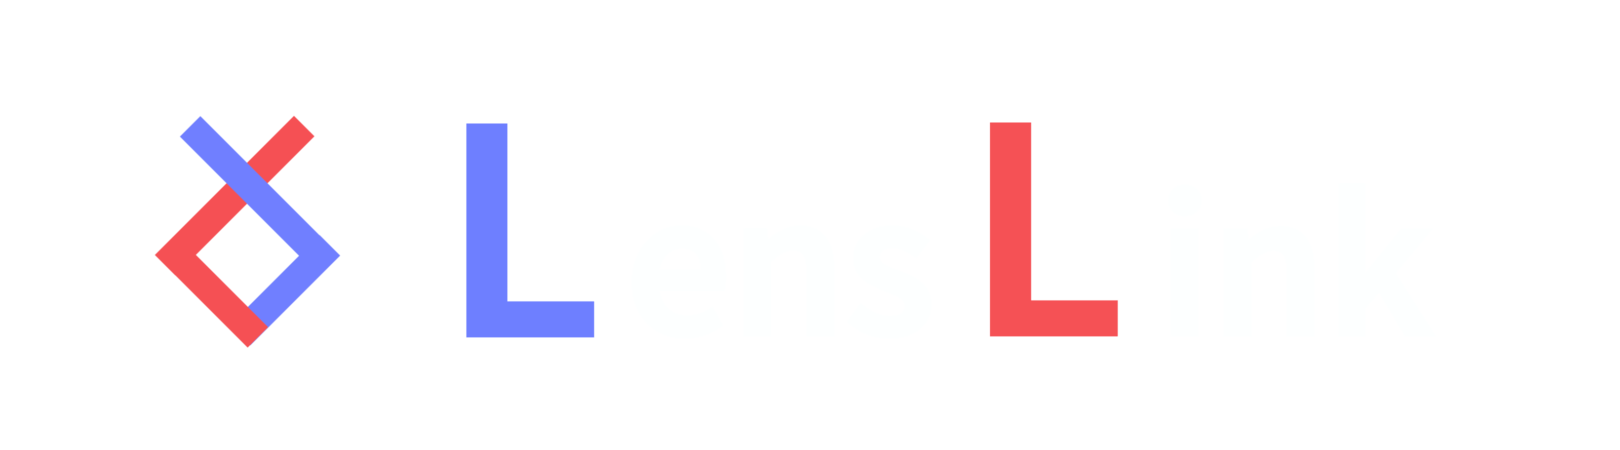 株式会社LensLink